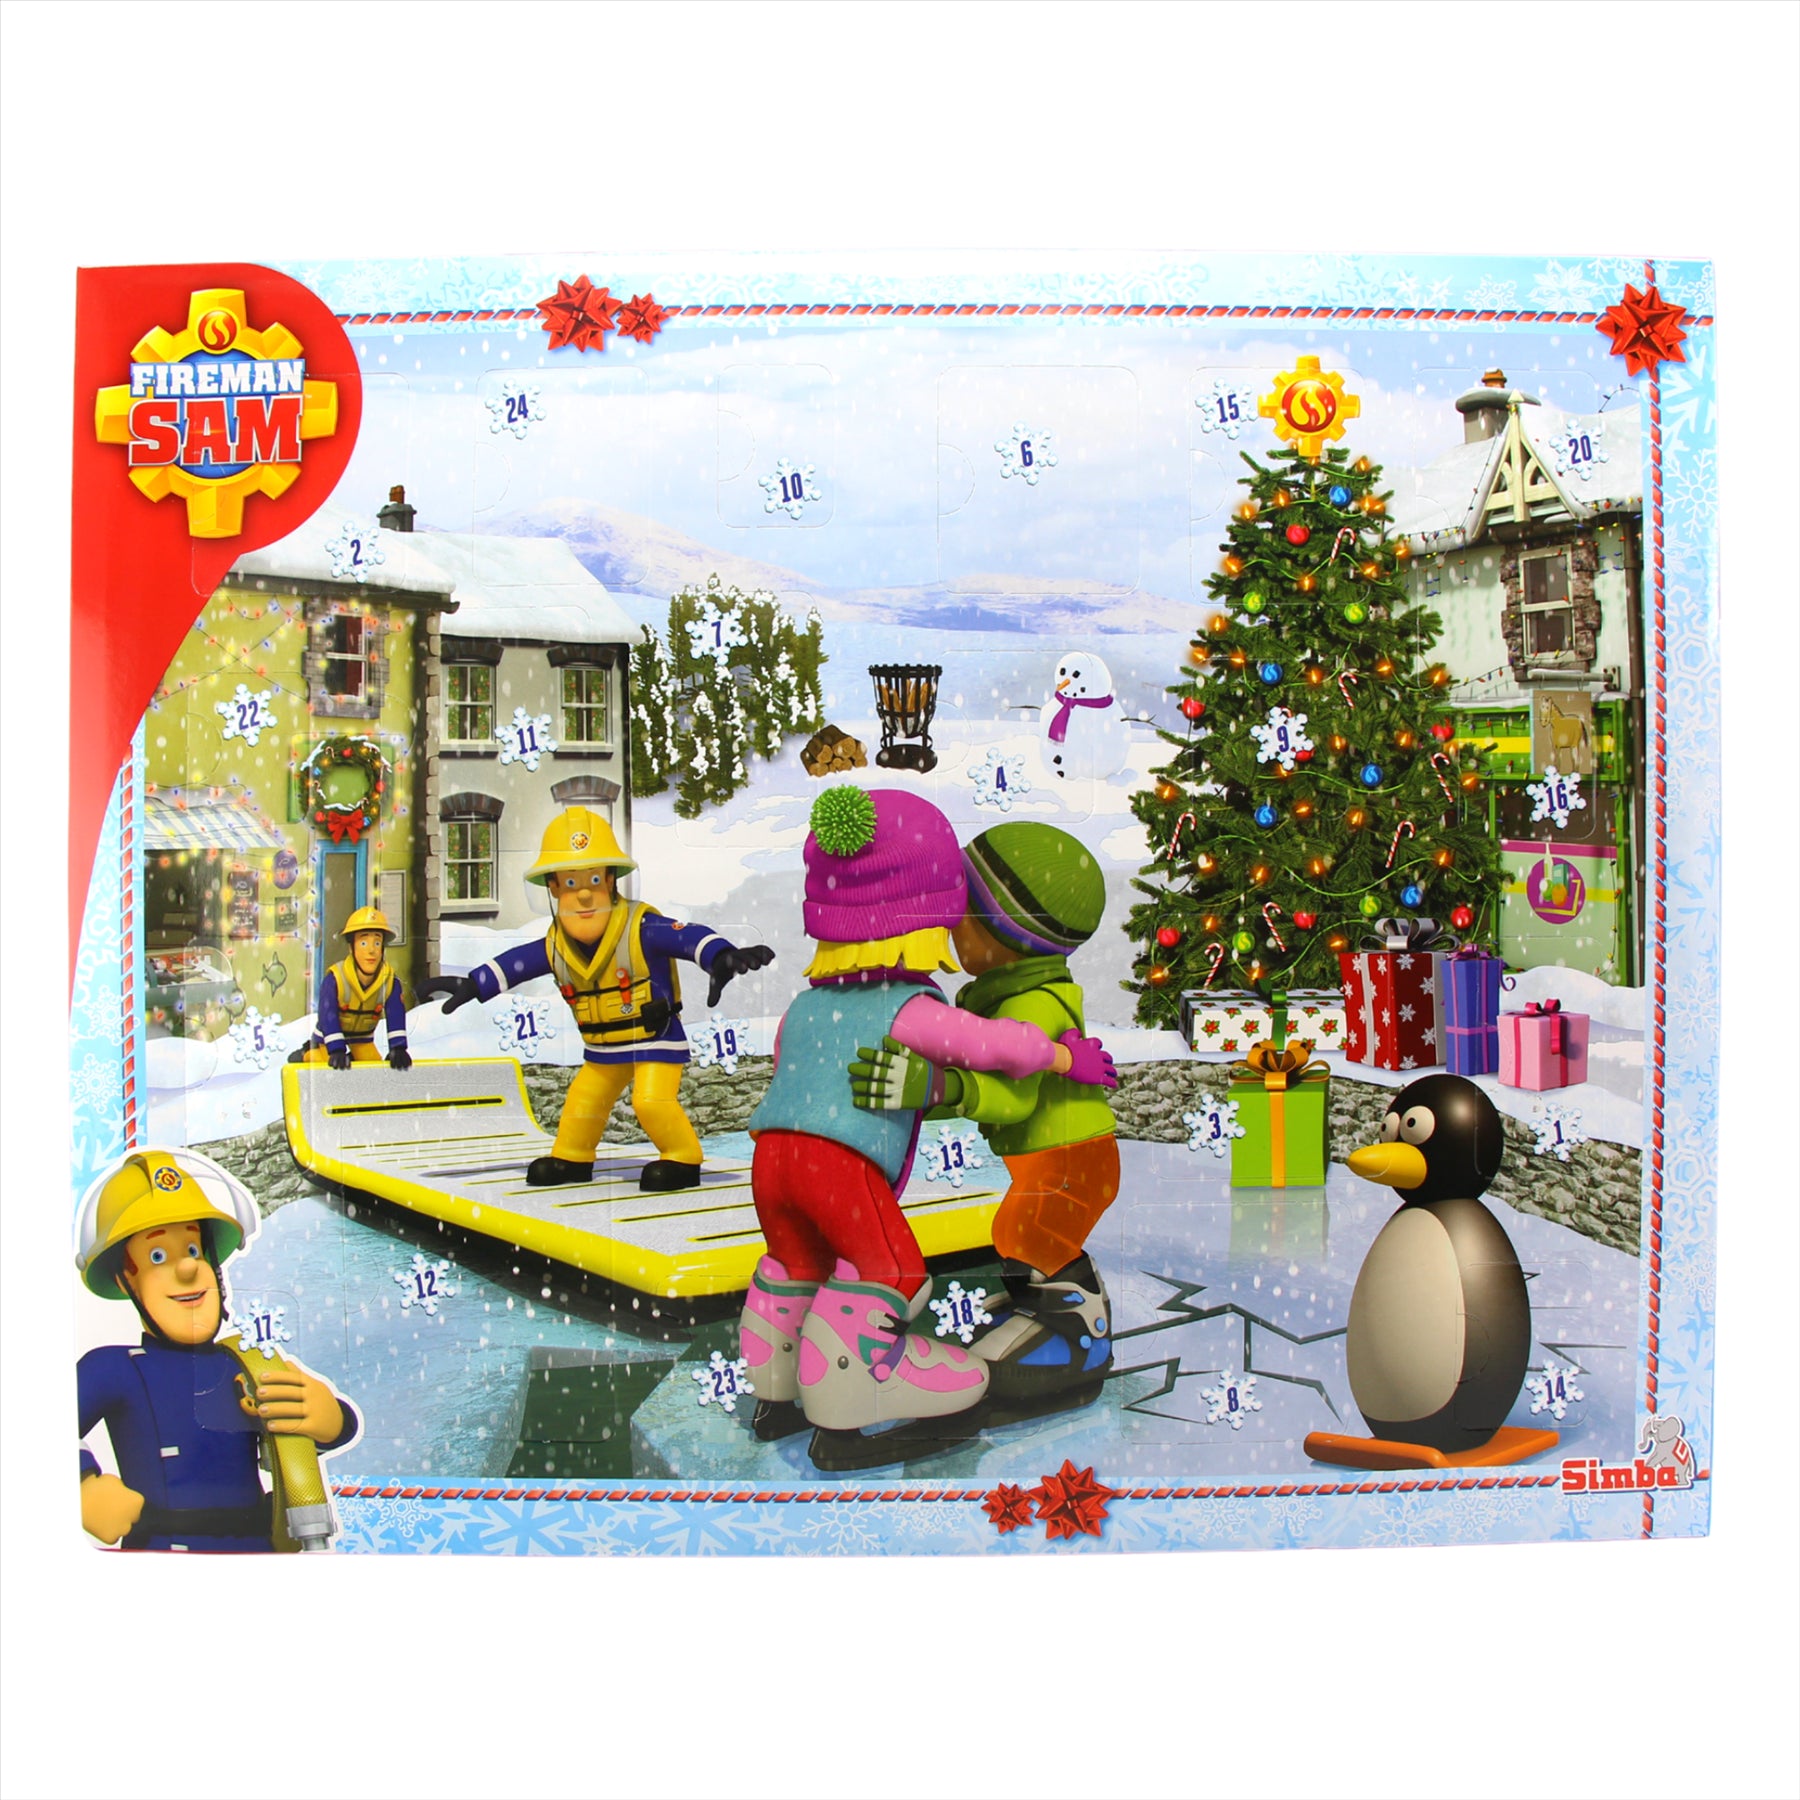 Simba 109251060 Fireman Sam Advent Calendar 2020, 24 Surprises, with Christmas Story, from 3 Years - Toptoys2u